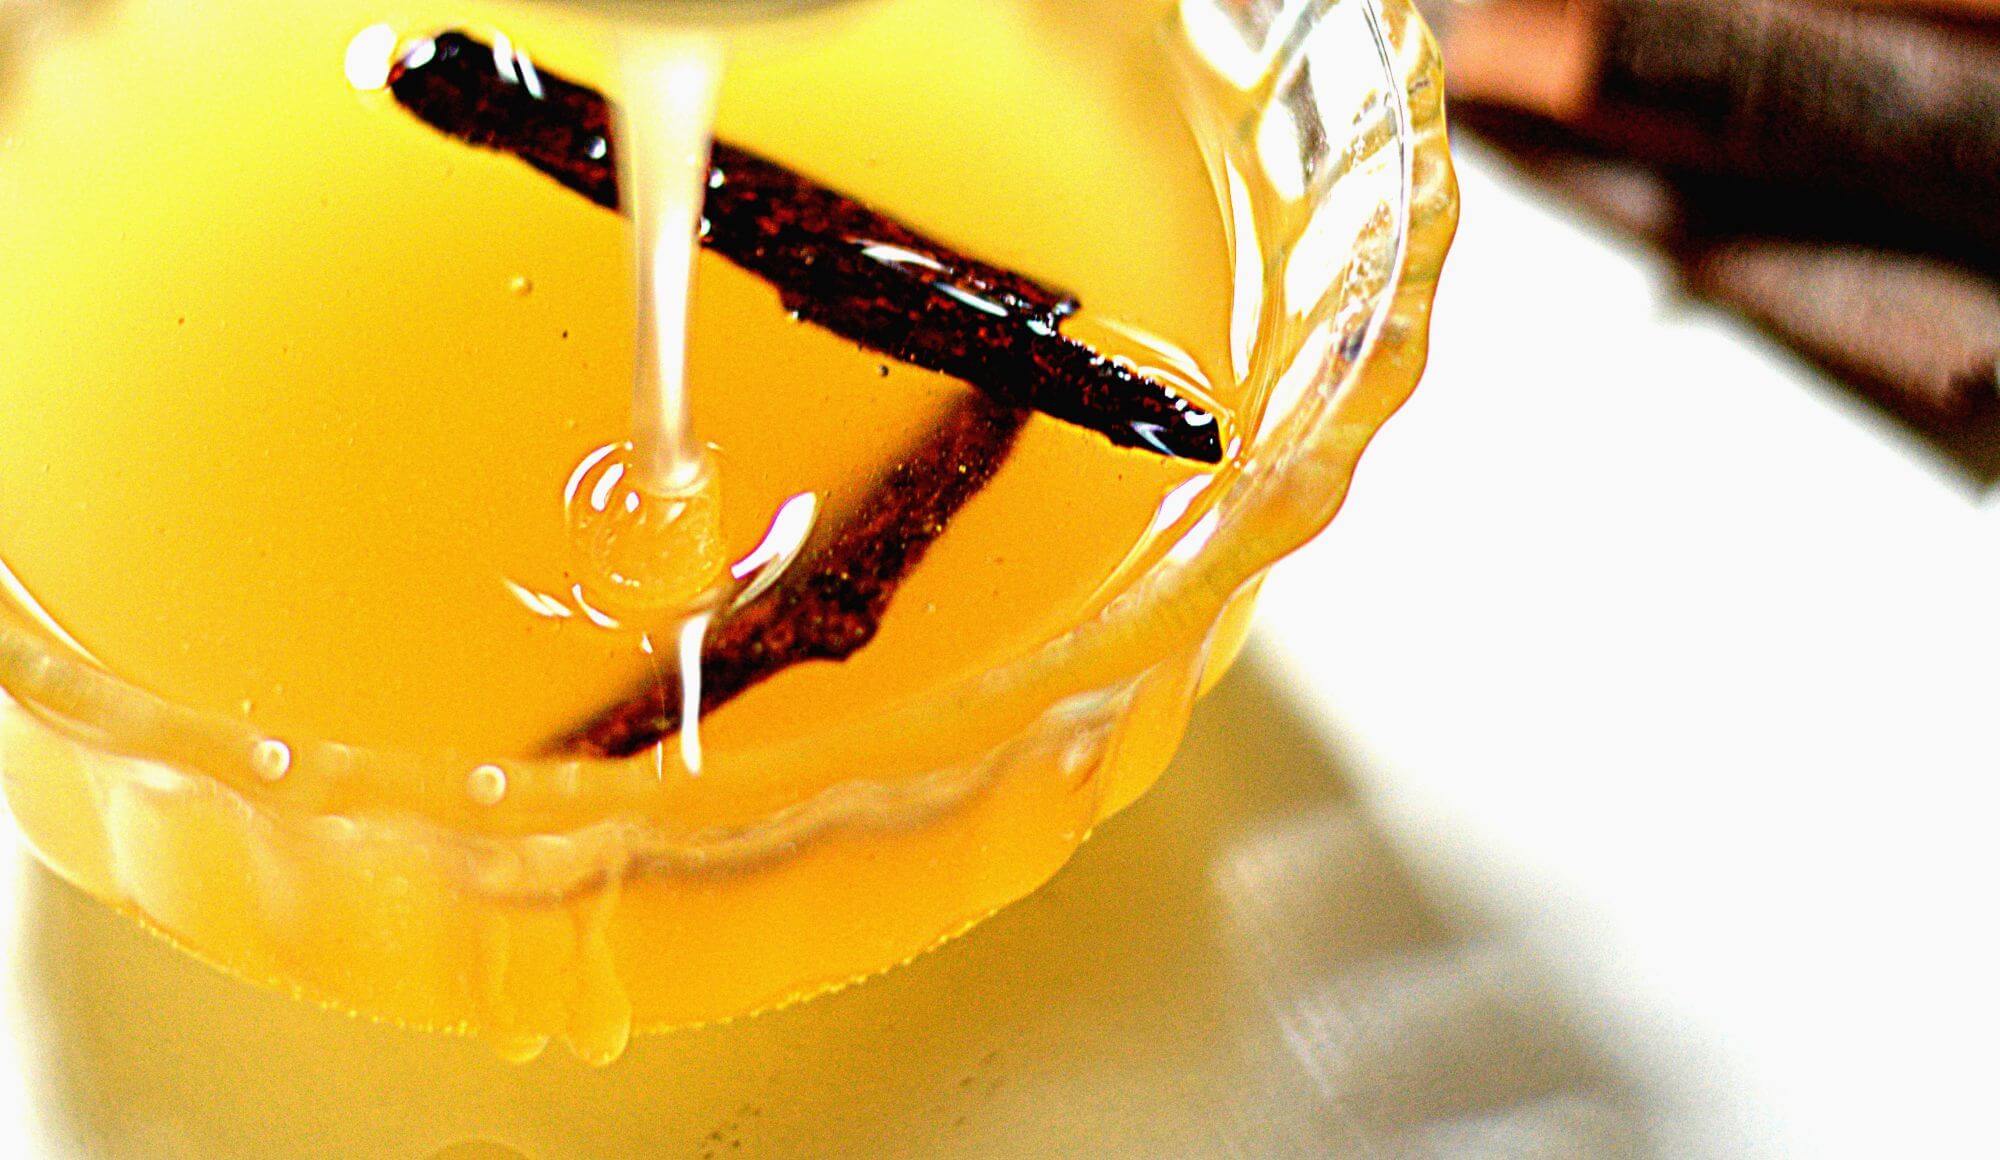 Consistency of the honey sugar syrup